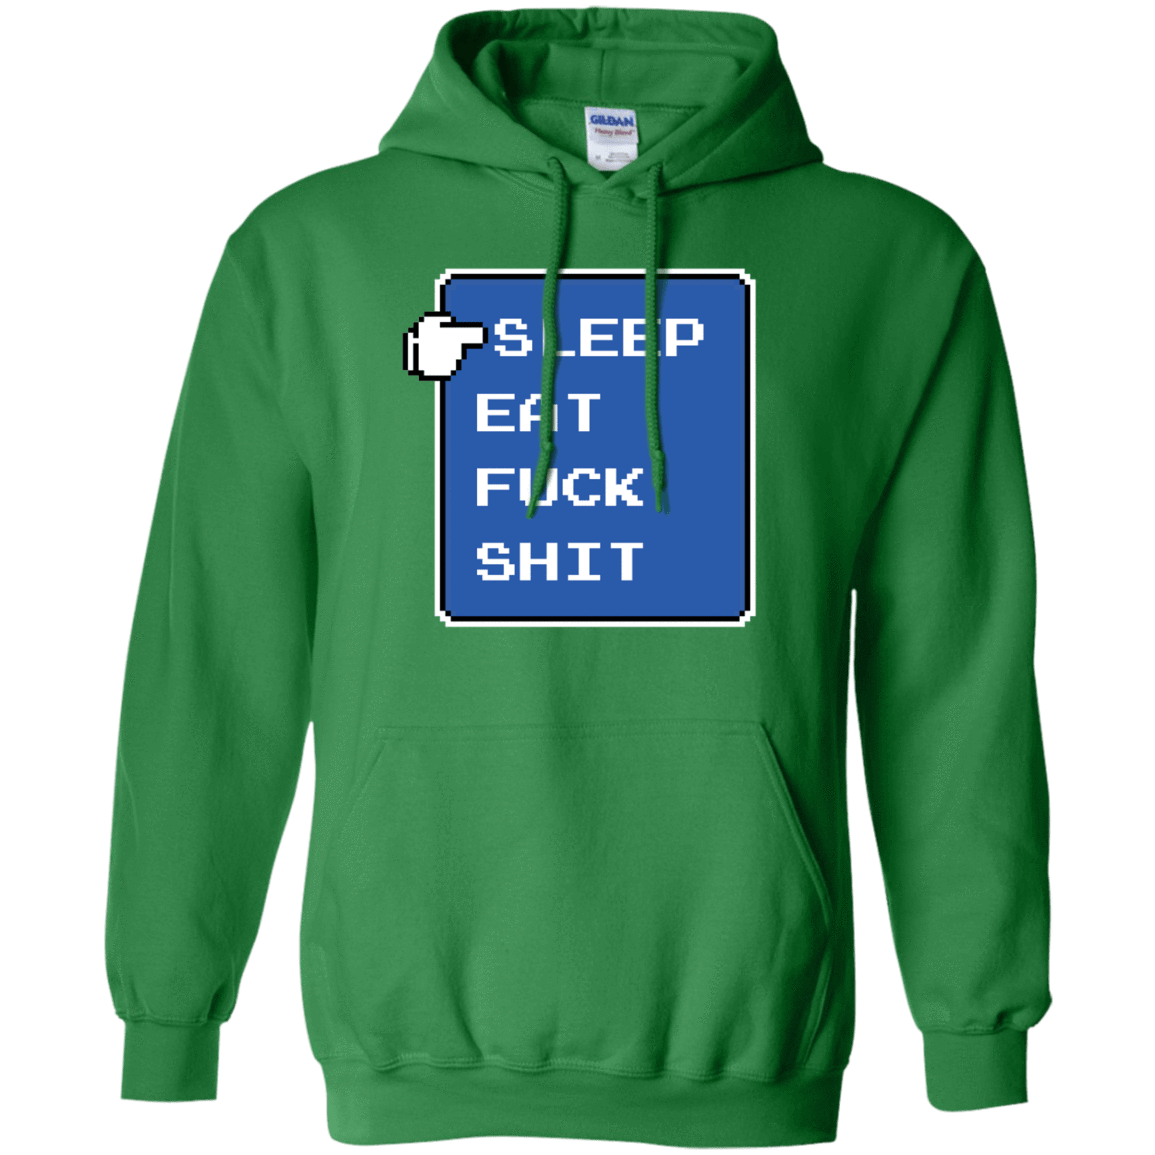 Sweatshirts Irish Green / Small RPG LIFE Pullover Hoodie